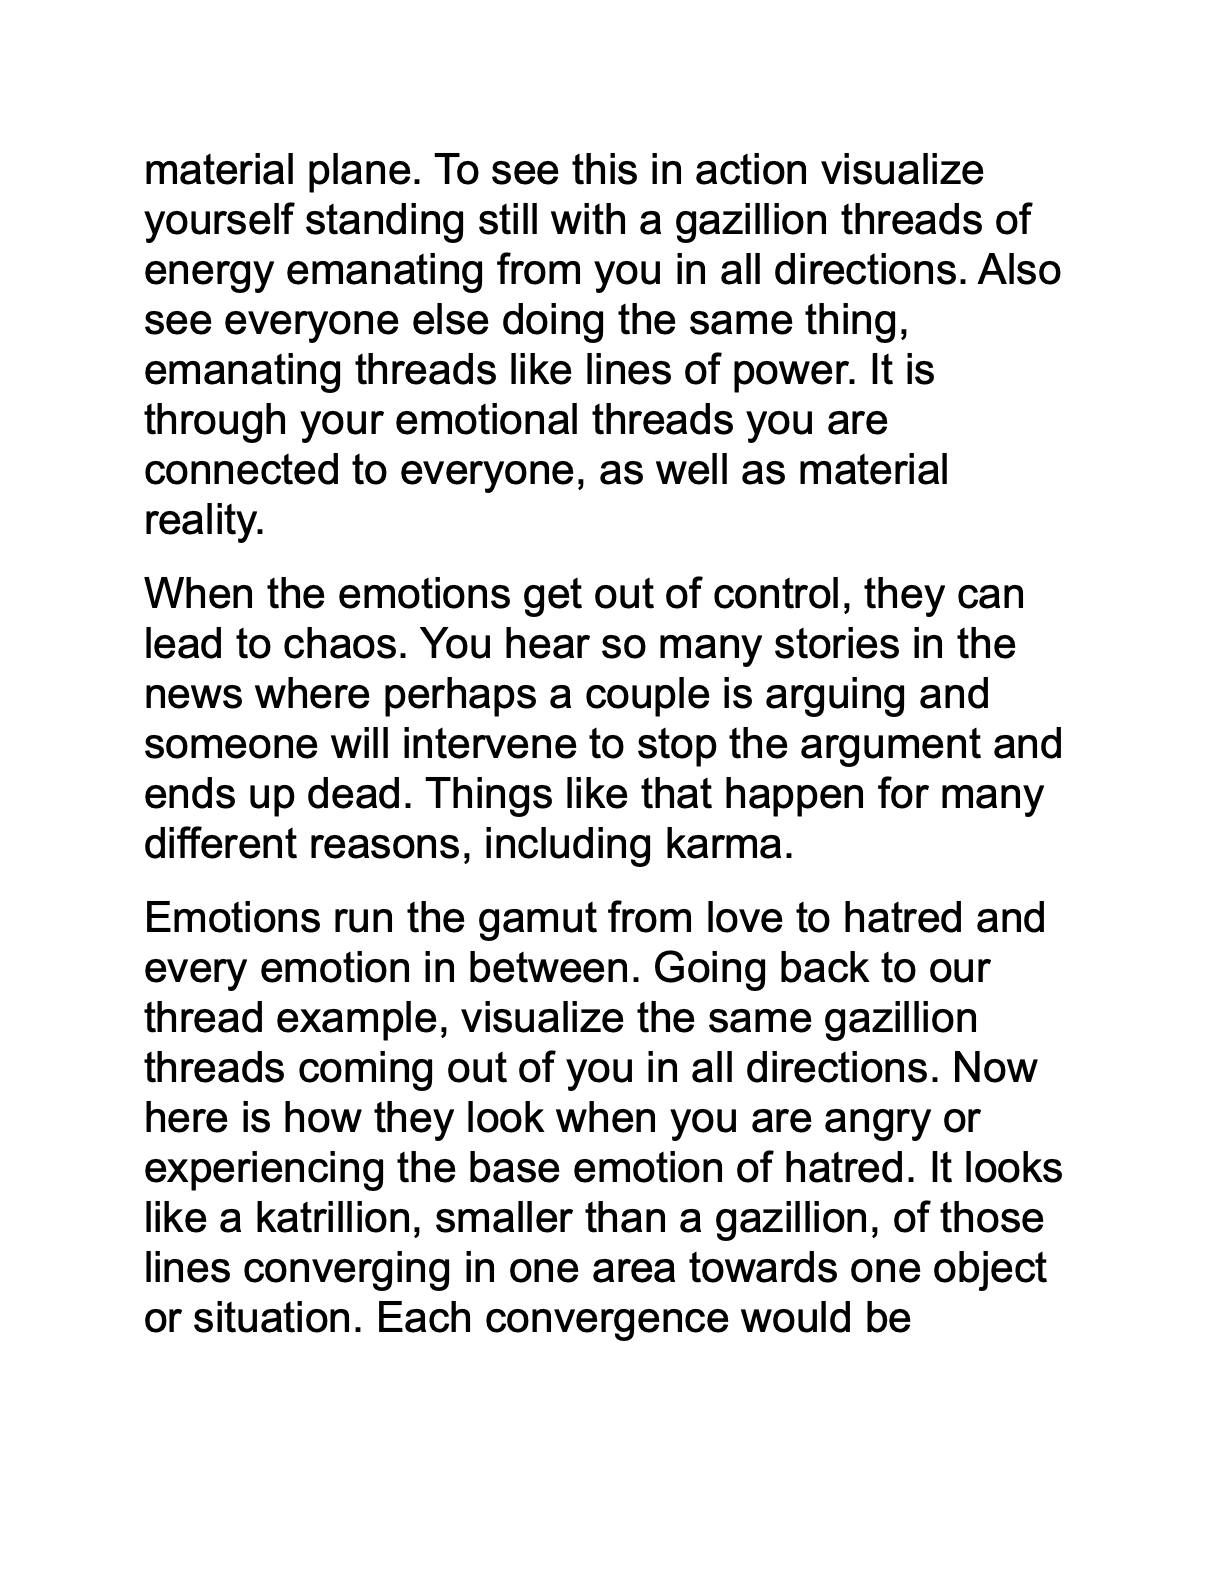 Discipline of Emotions